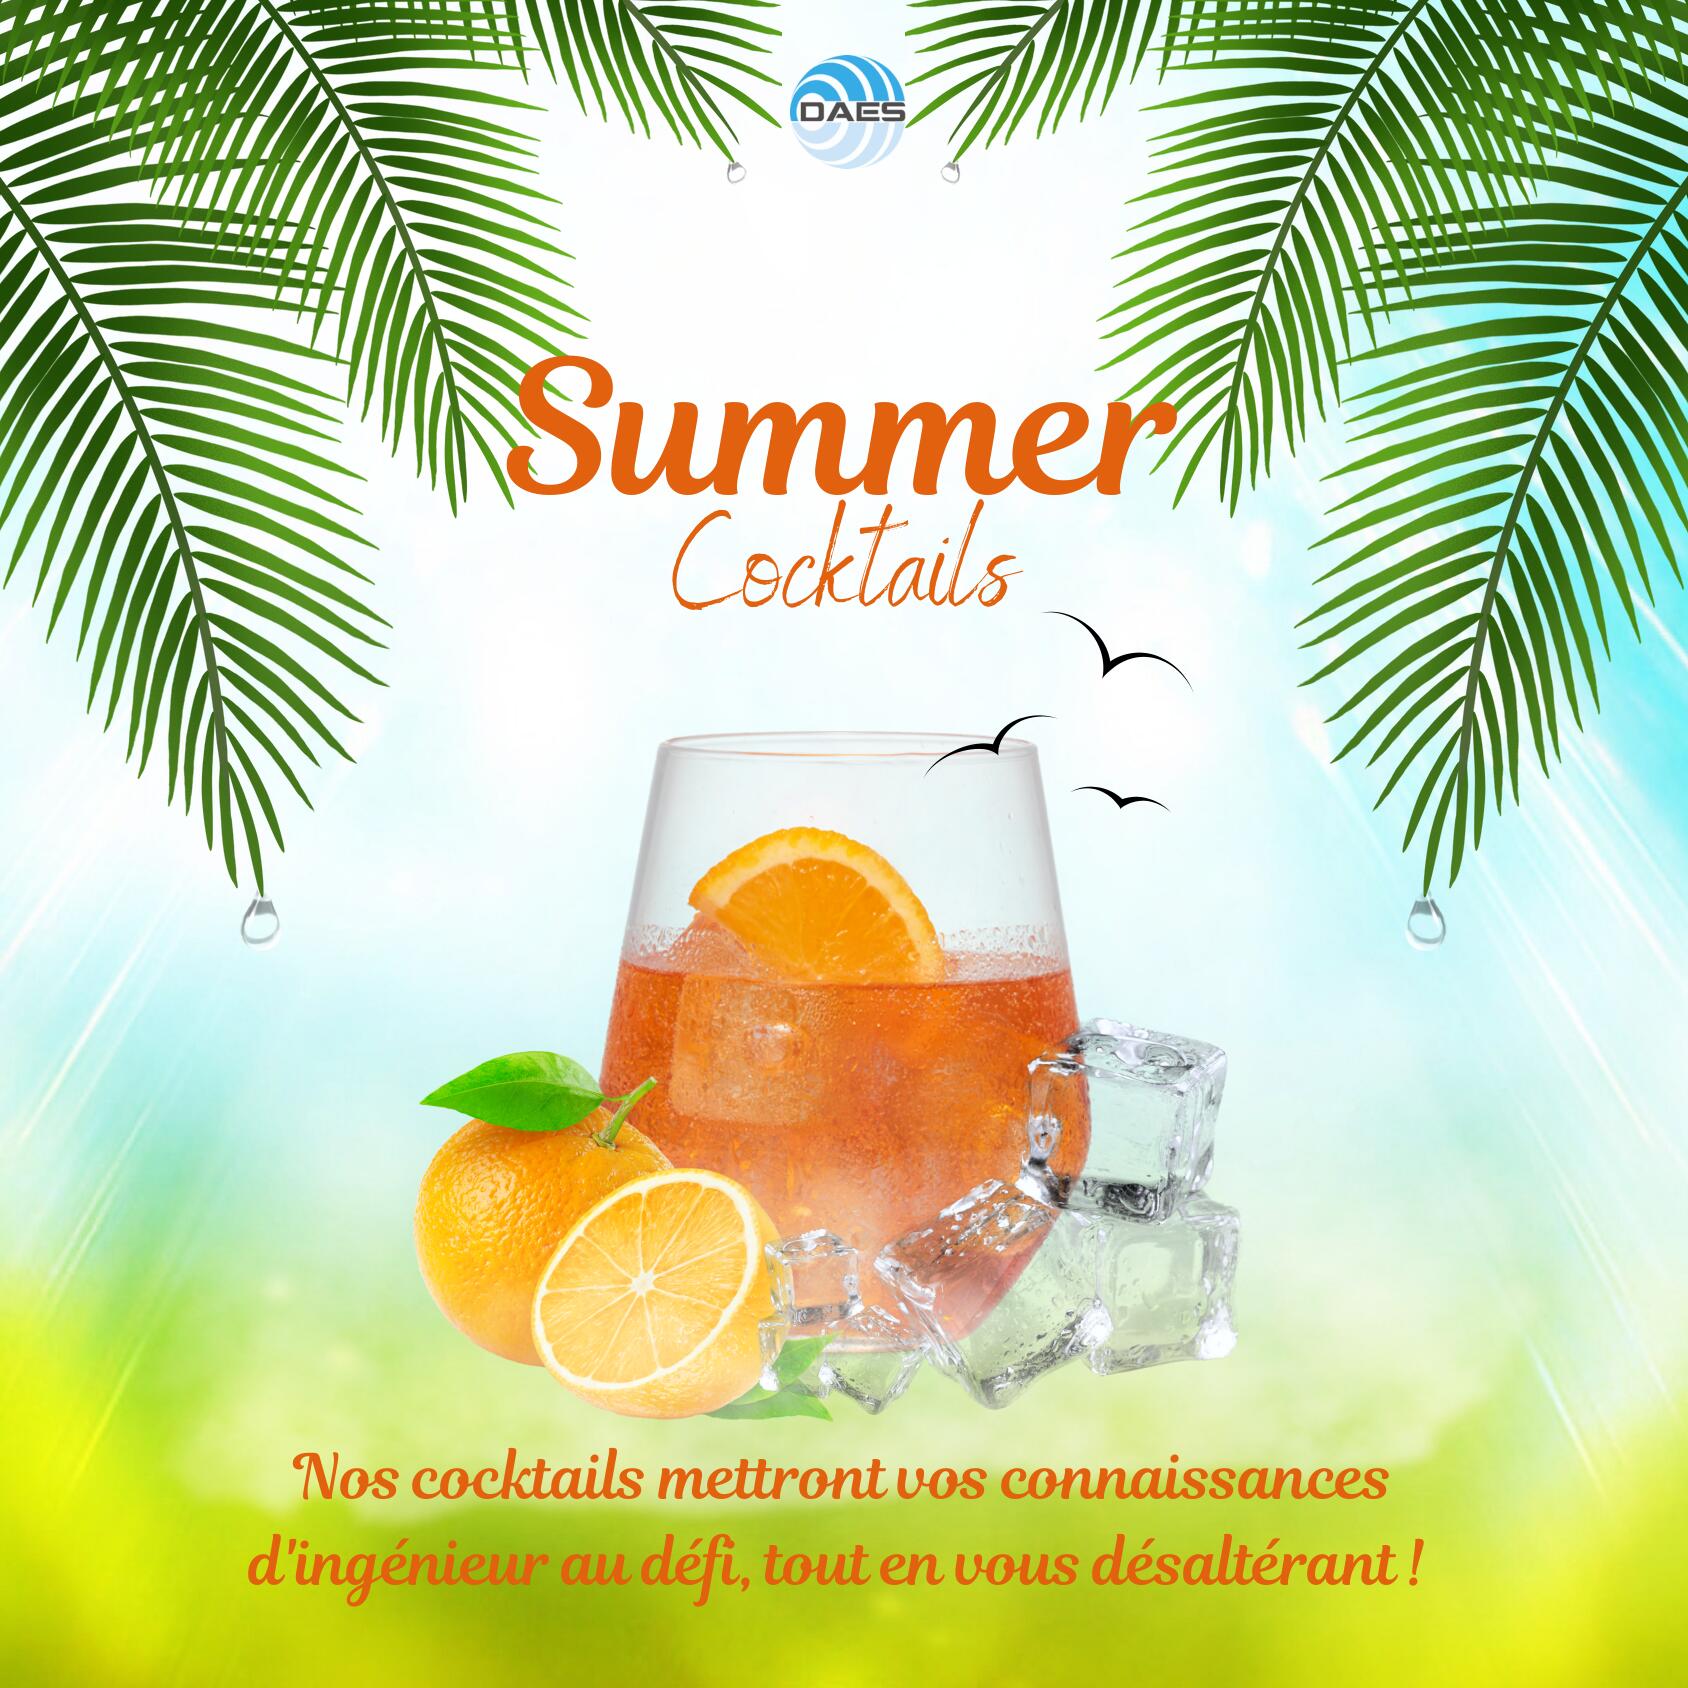 DAES Summer Cocktail 1